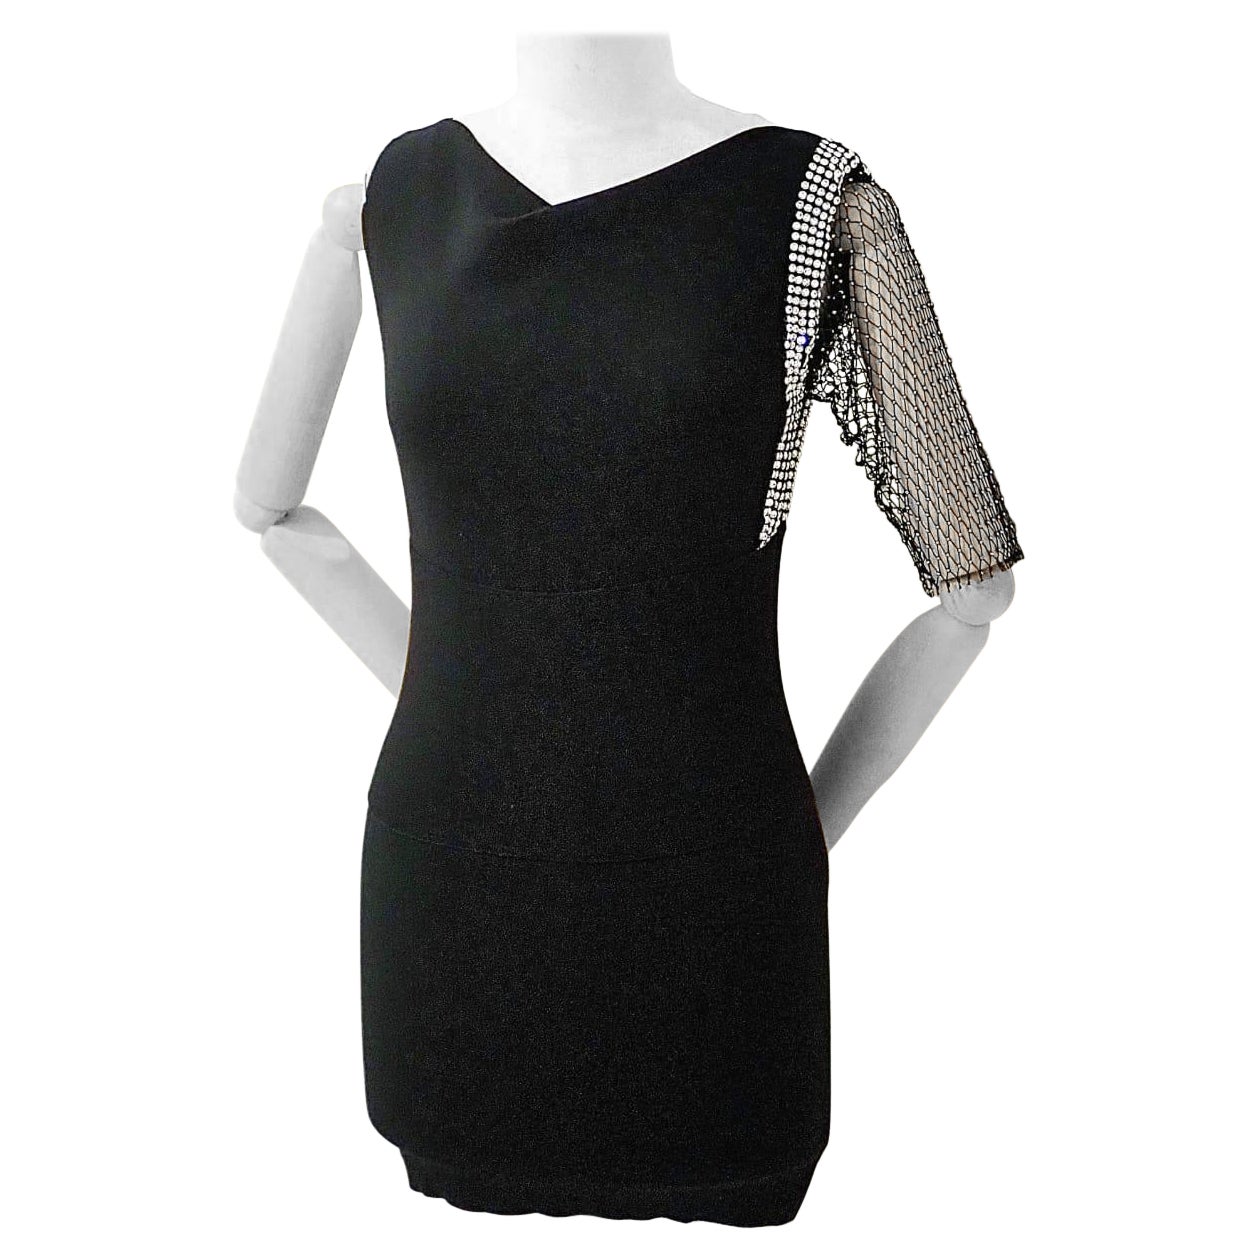 Balmain black dress crystal swarovski stones dress For Sale